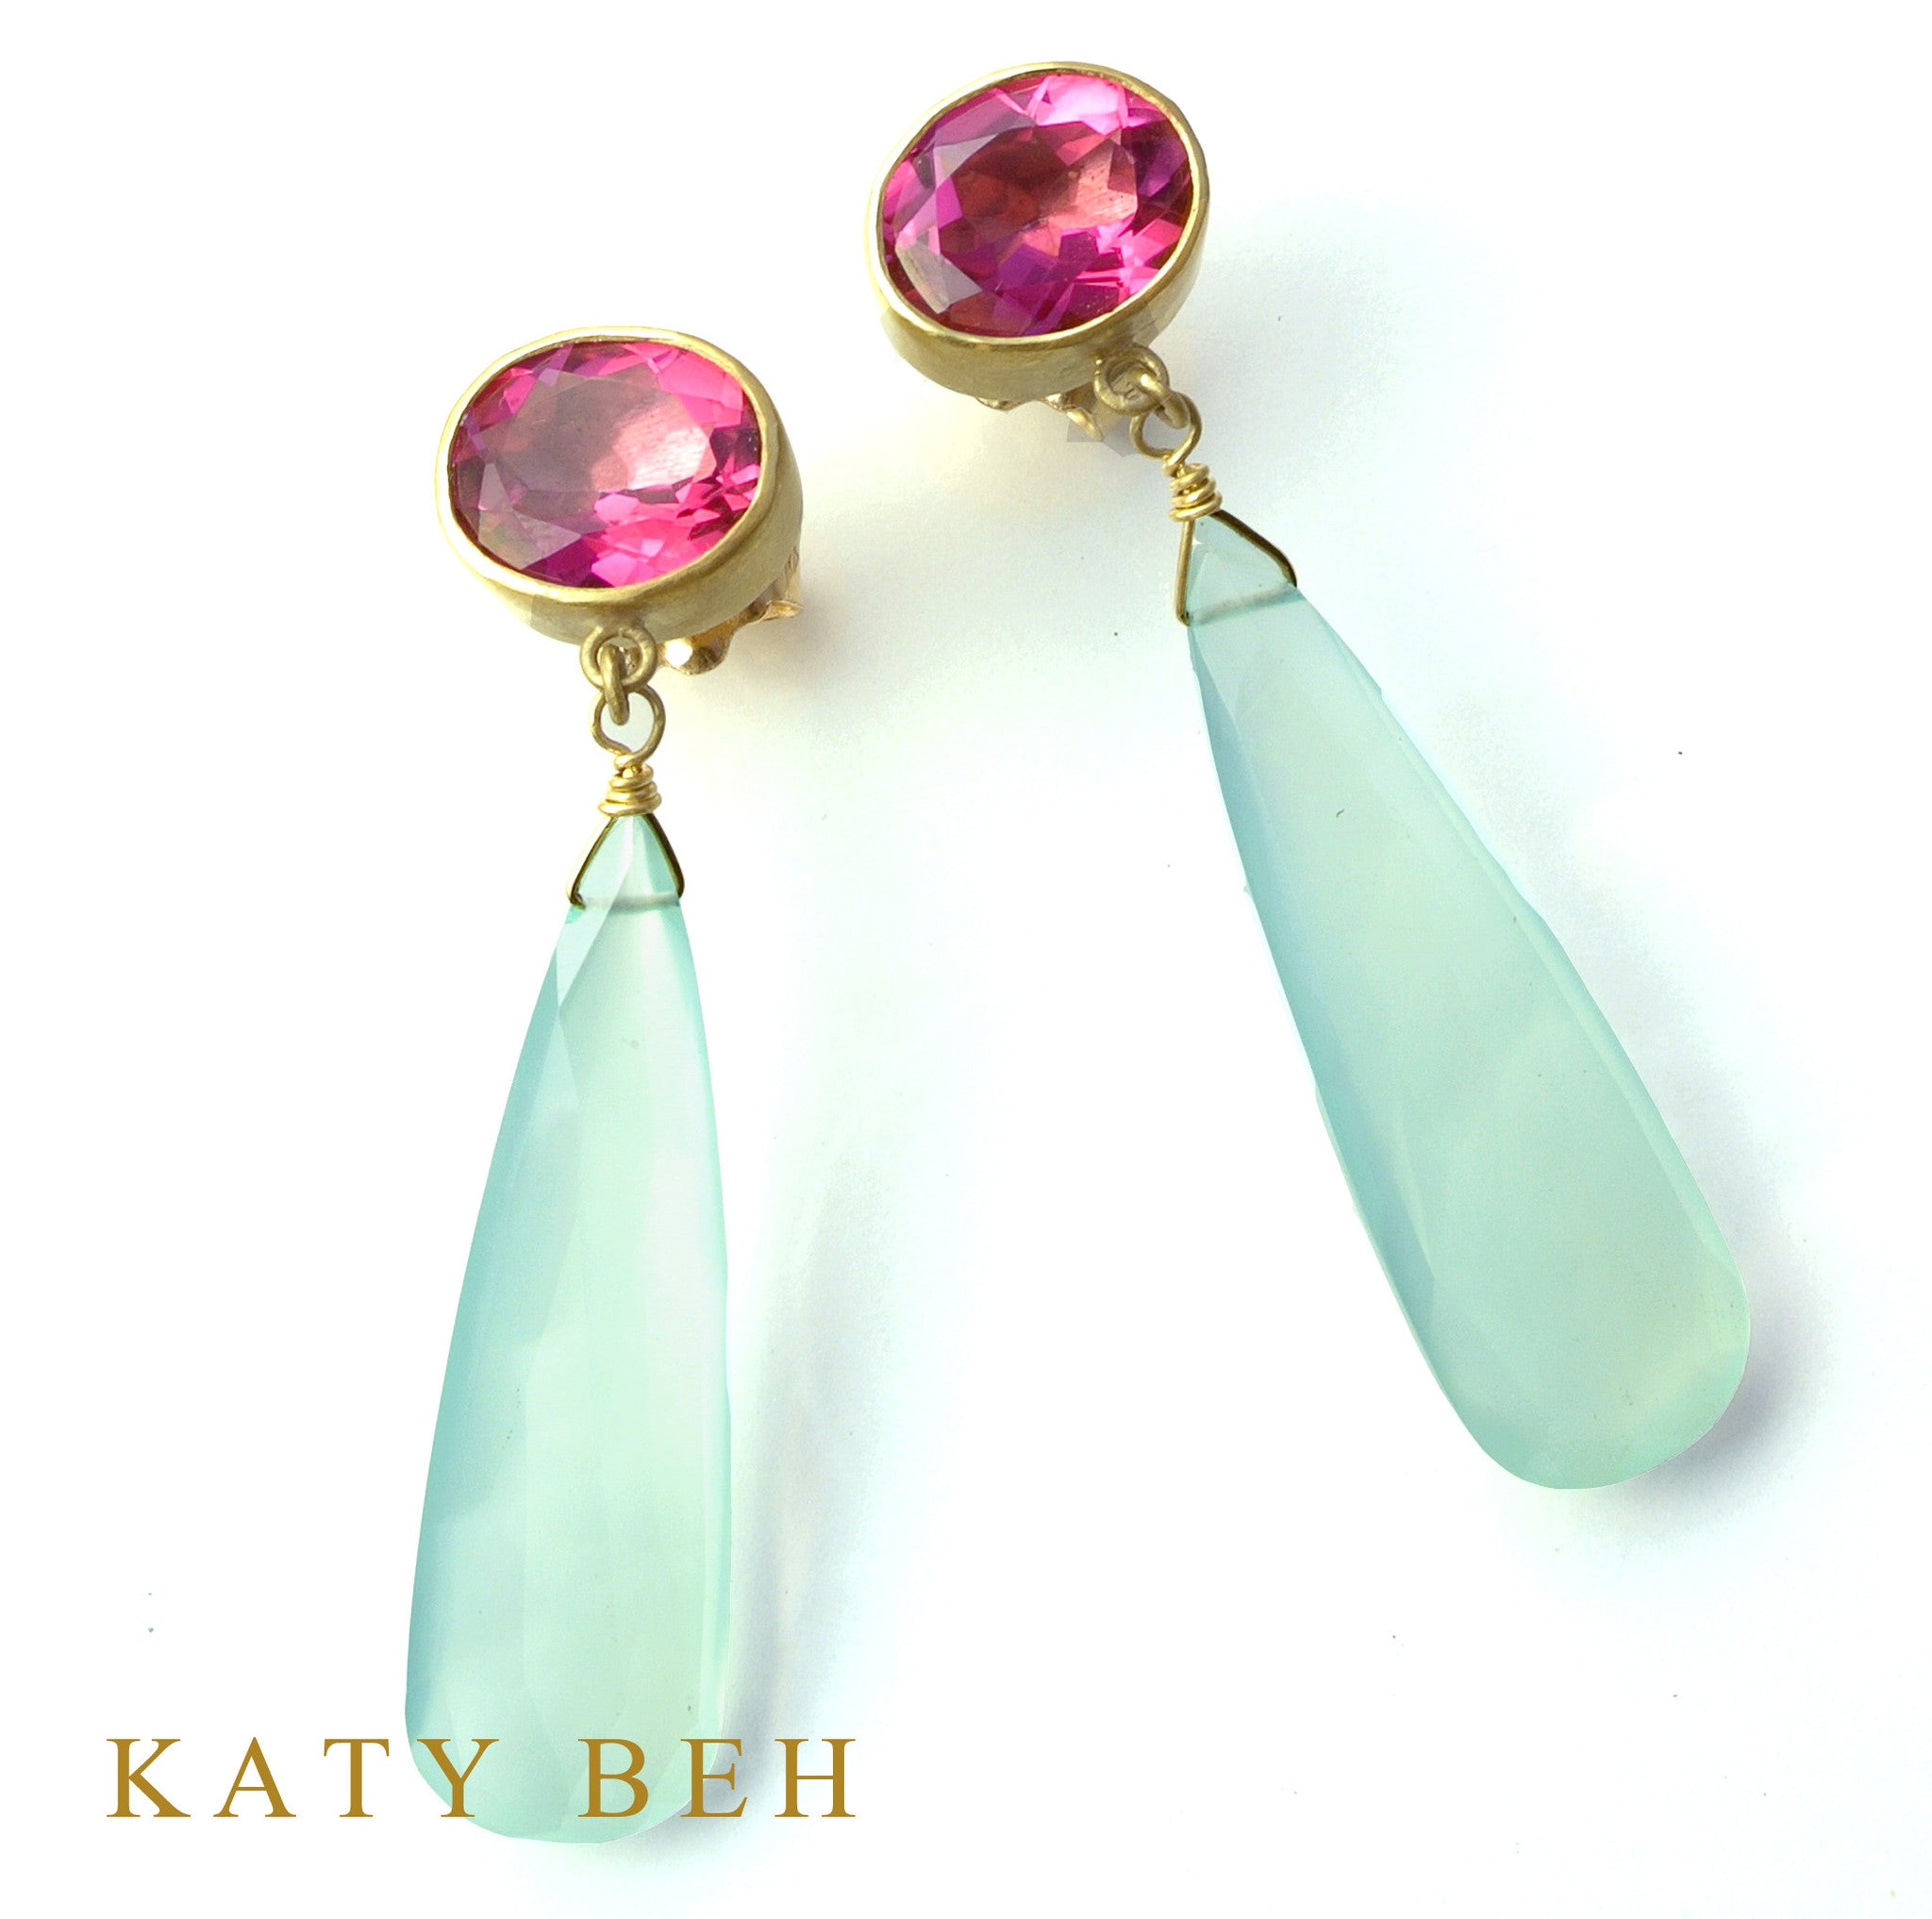 Earrings - Katy Beh 22k Gold Handmade Jewelry New Orleans